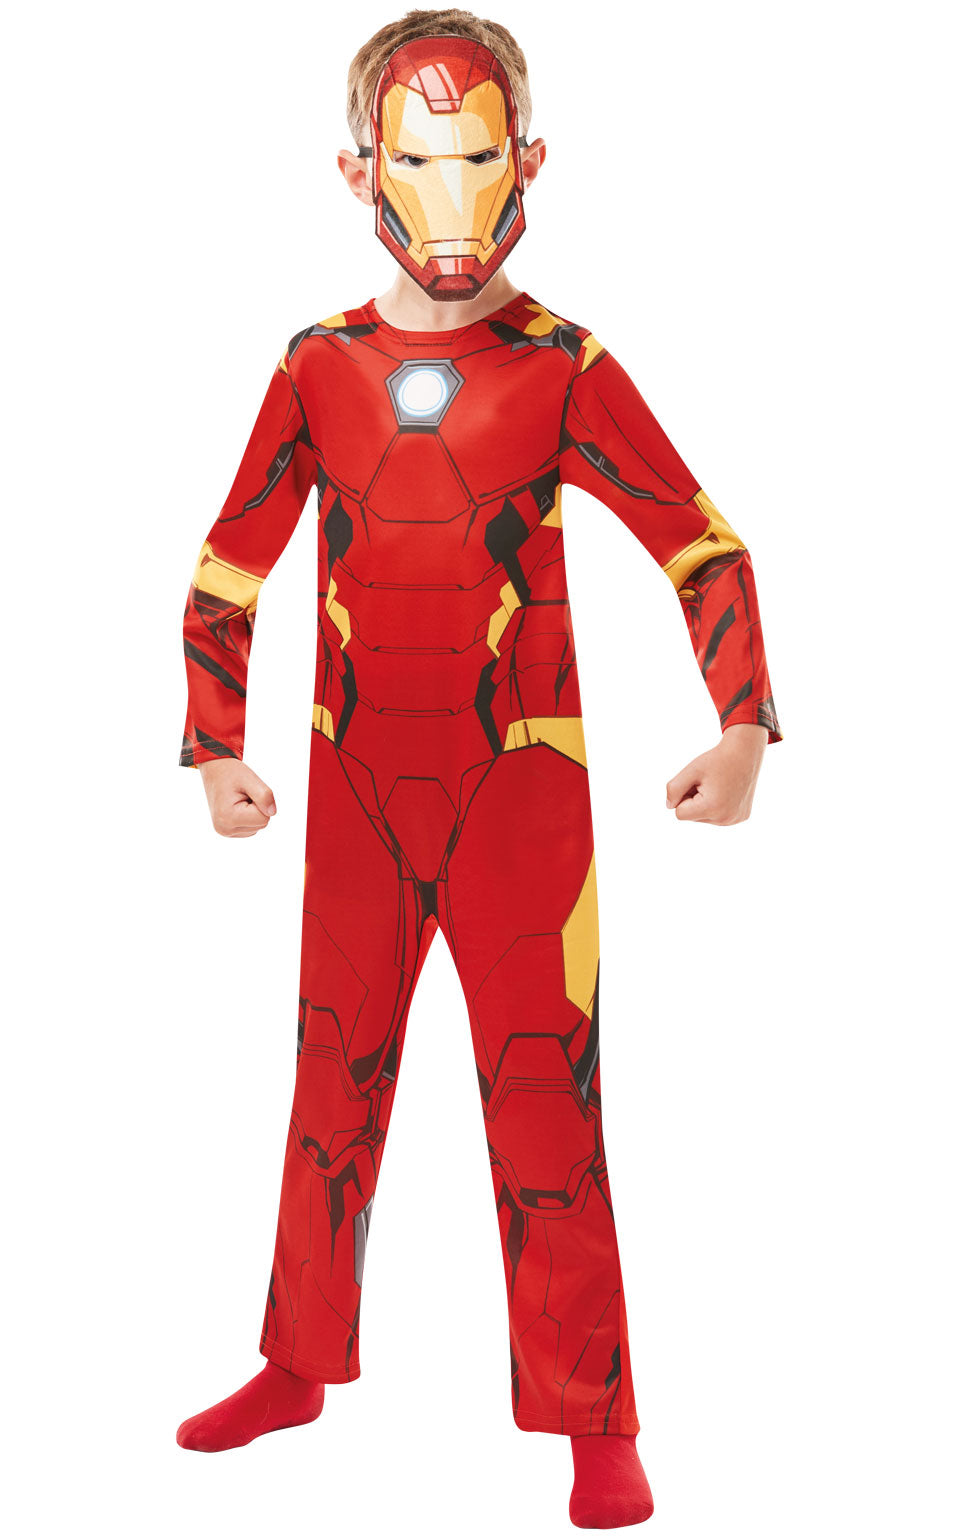 Iron Man Costume - (Toddler/Child)